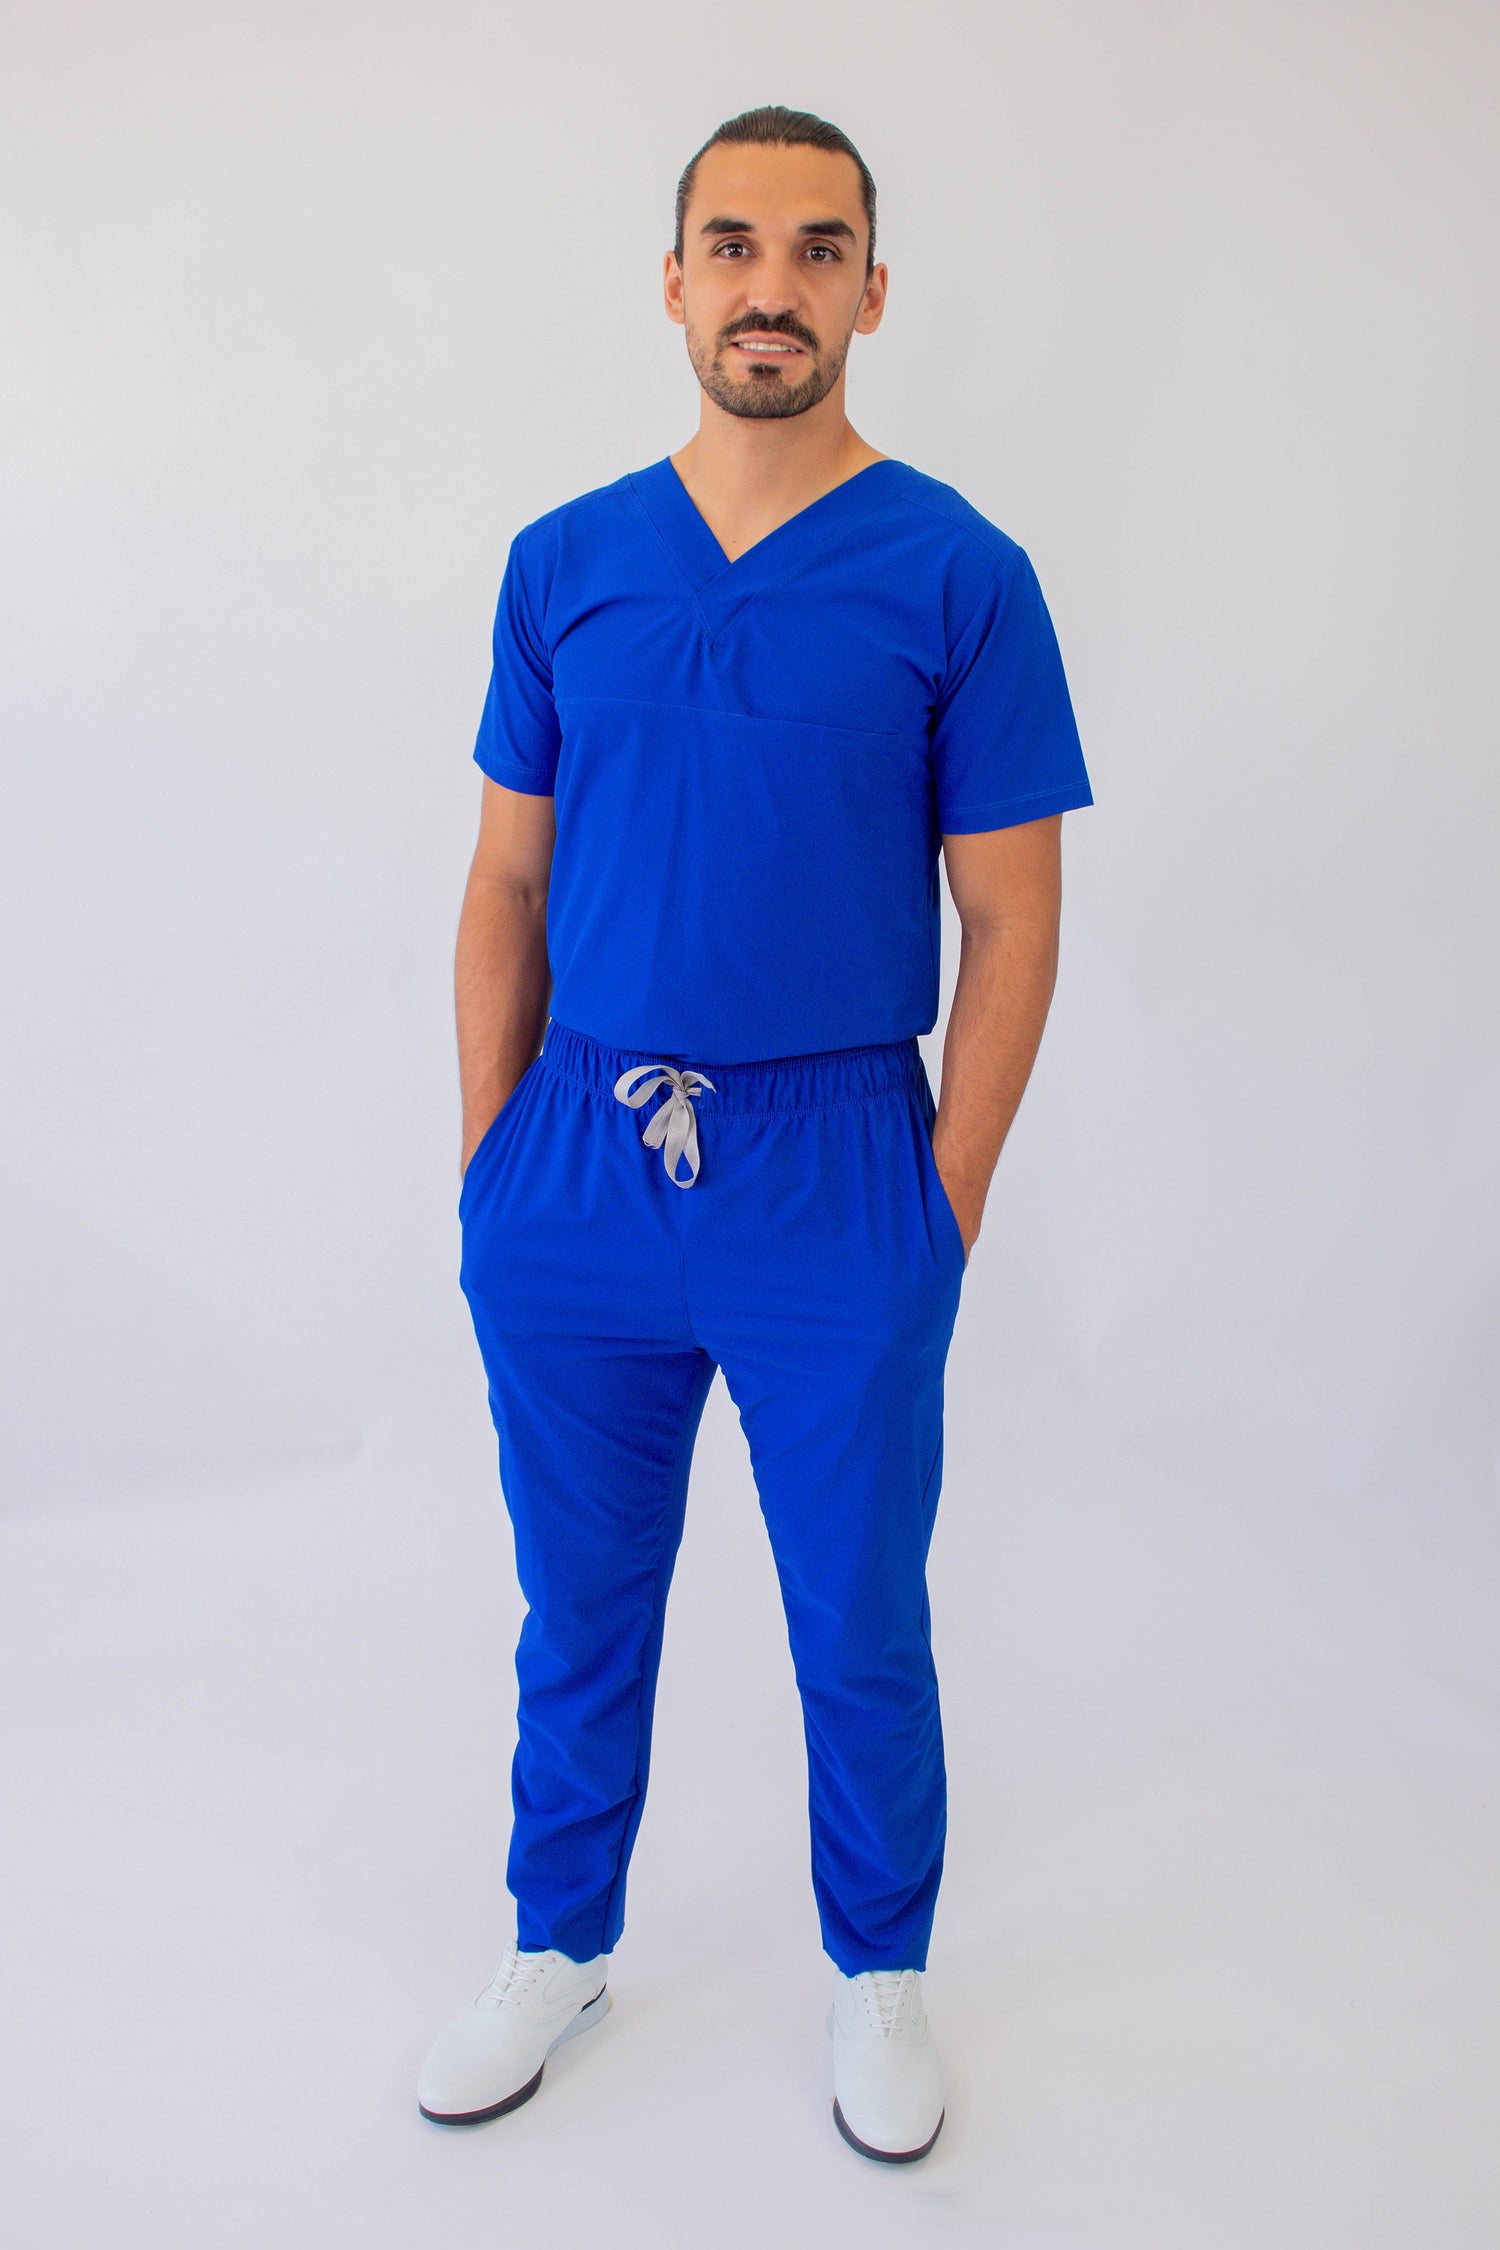 HOMBRE - scrubs - uniformes quirúrgicos